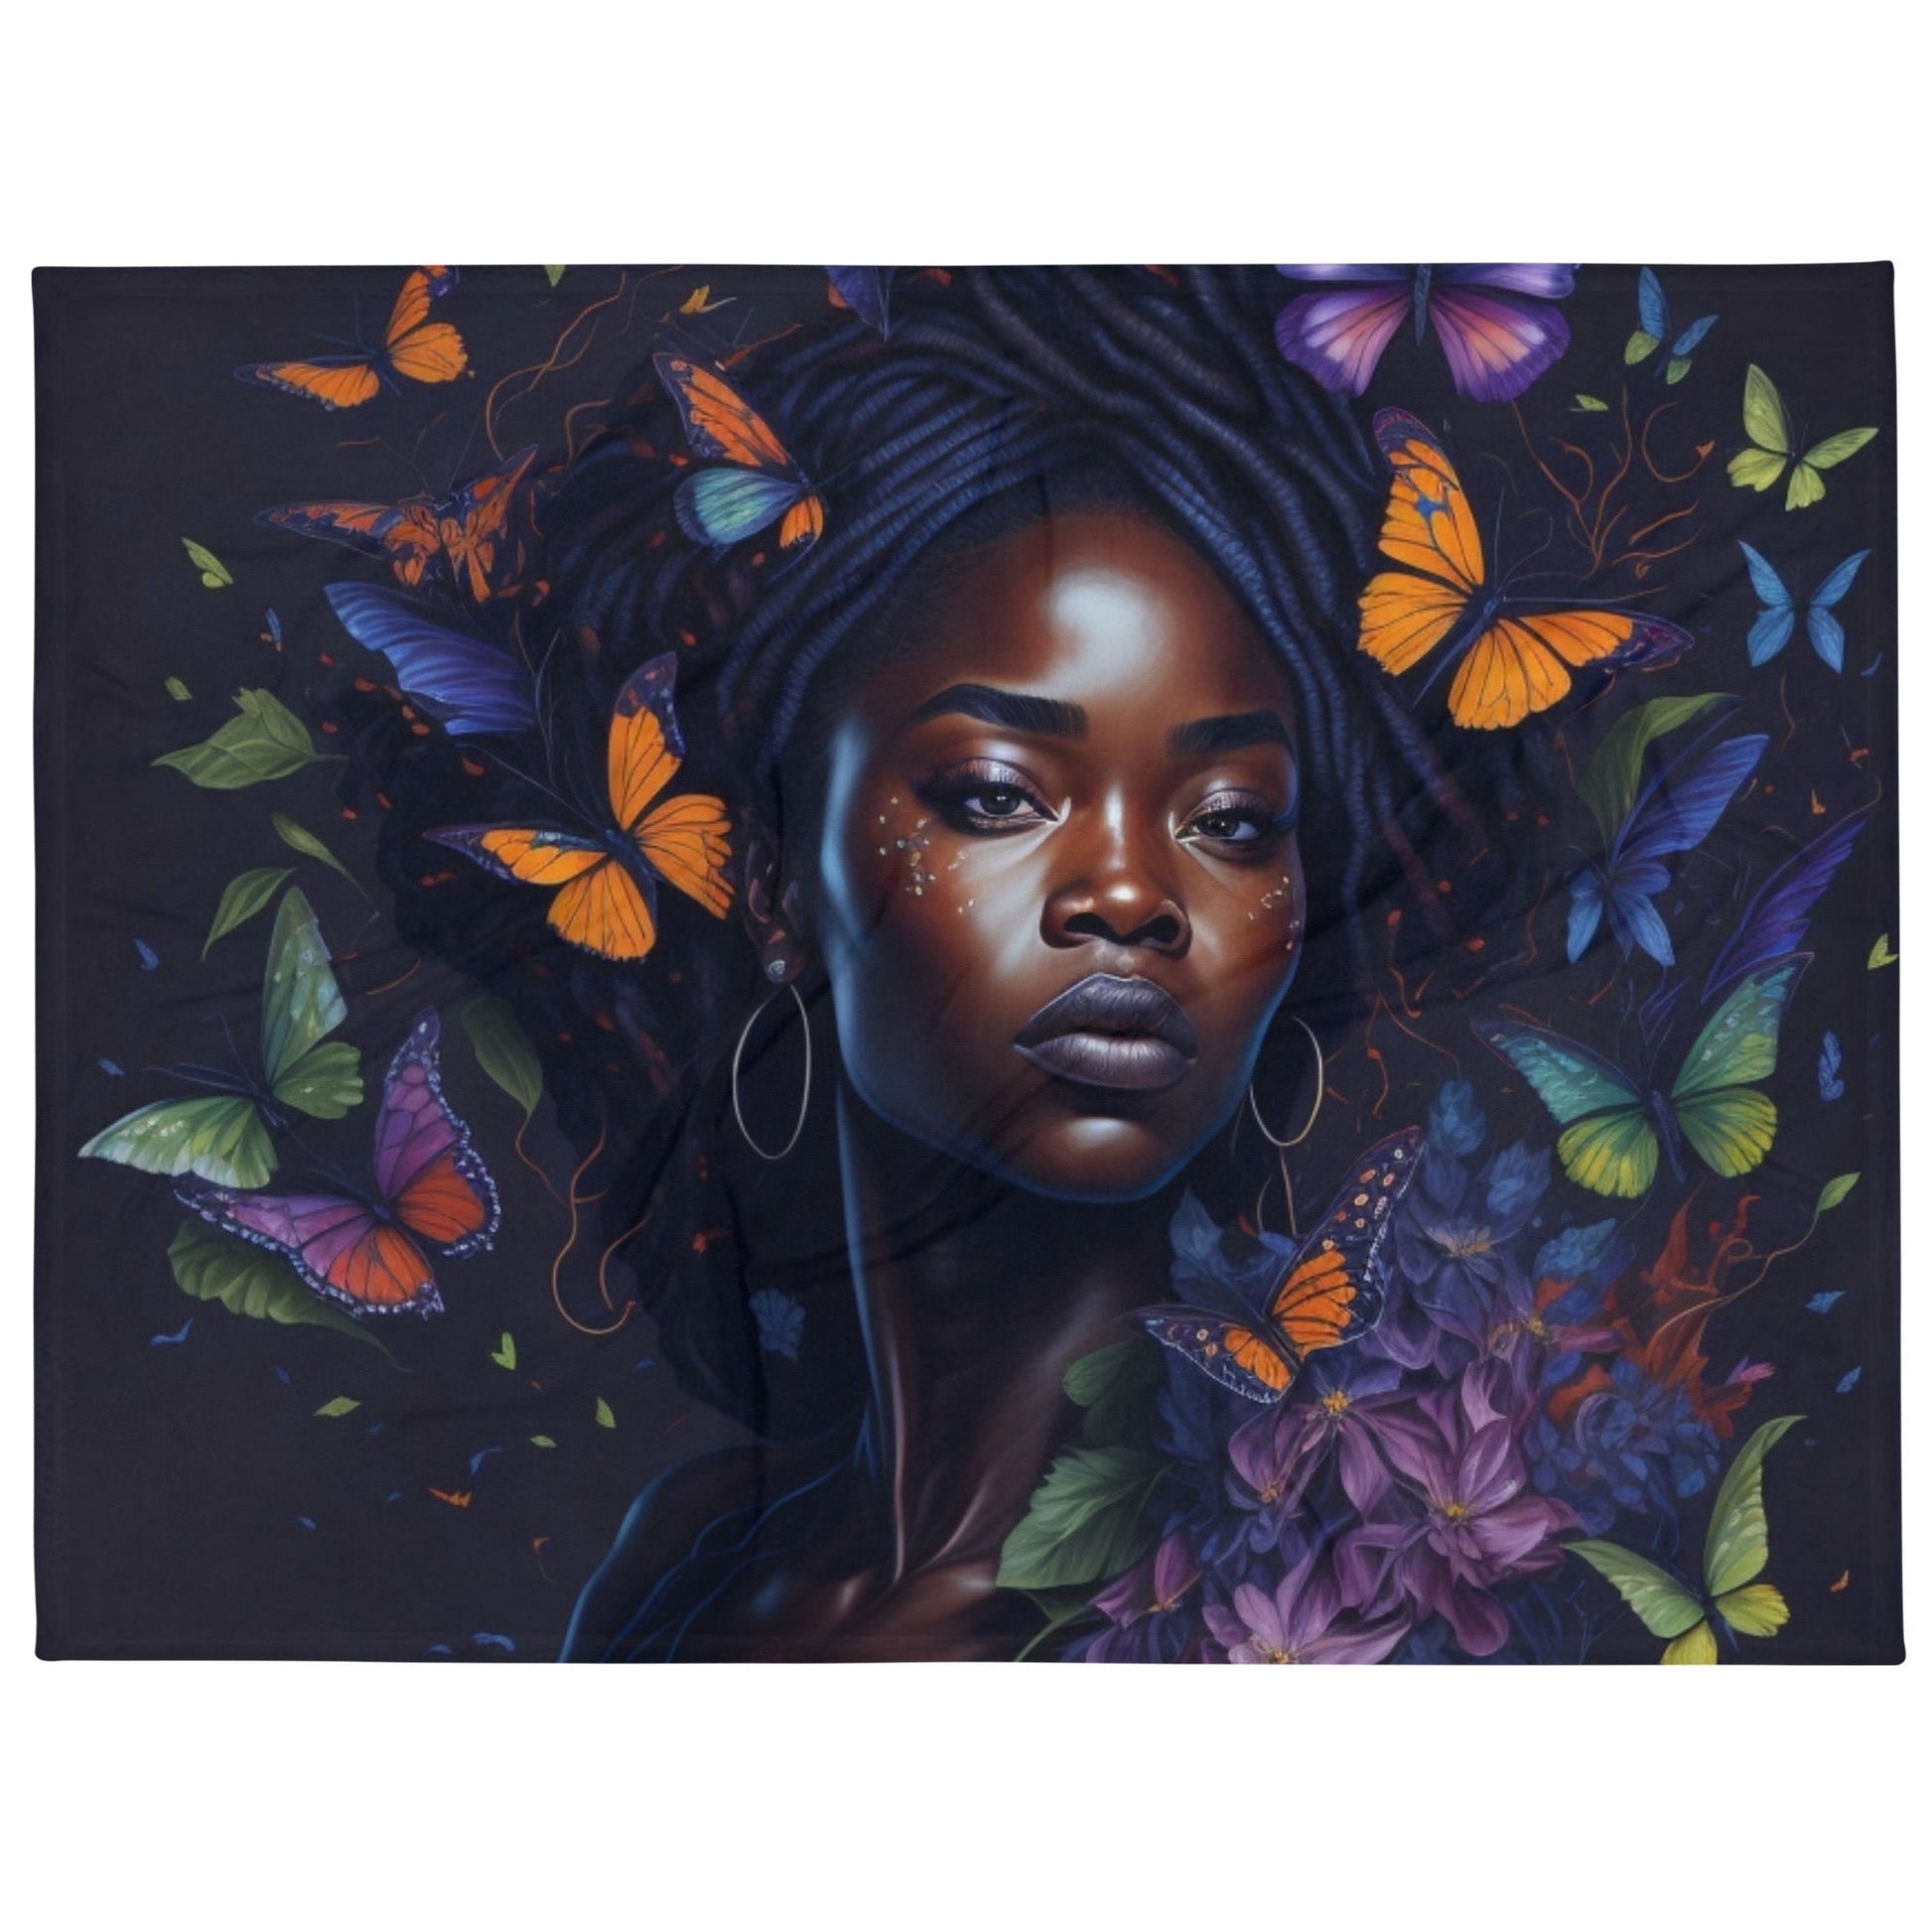 Graceful Wings: Portrait of an African American Woman with Fluttering Butterflies Throw Blanket-THROW BLANKET-mysticalcherry